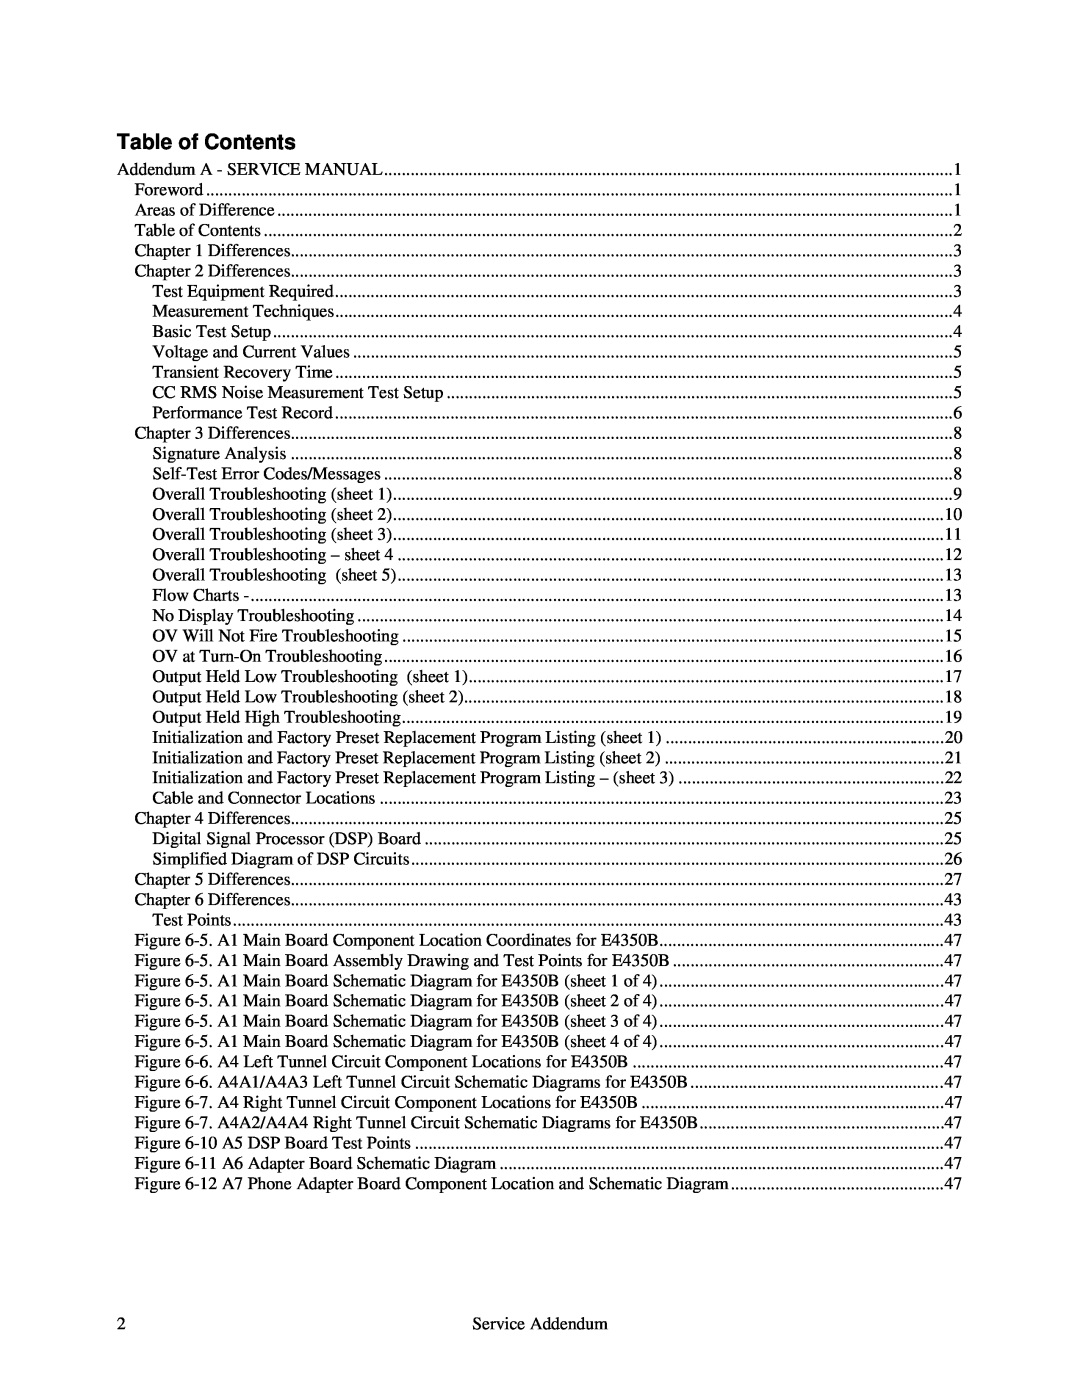 Agilent Technologies E4351B, E4350B service manual Table of Contents 